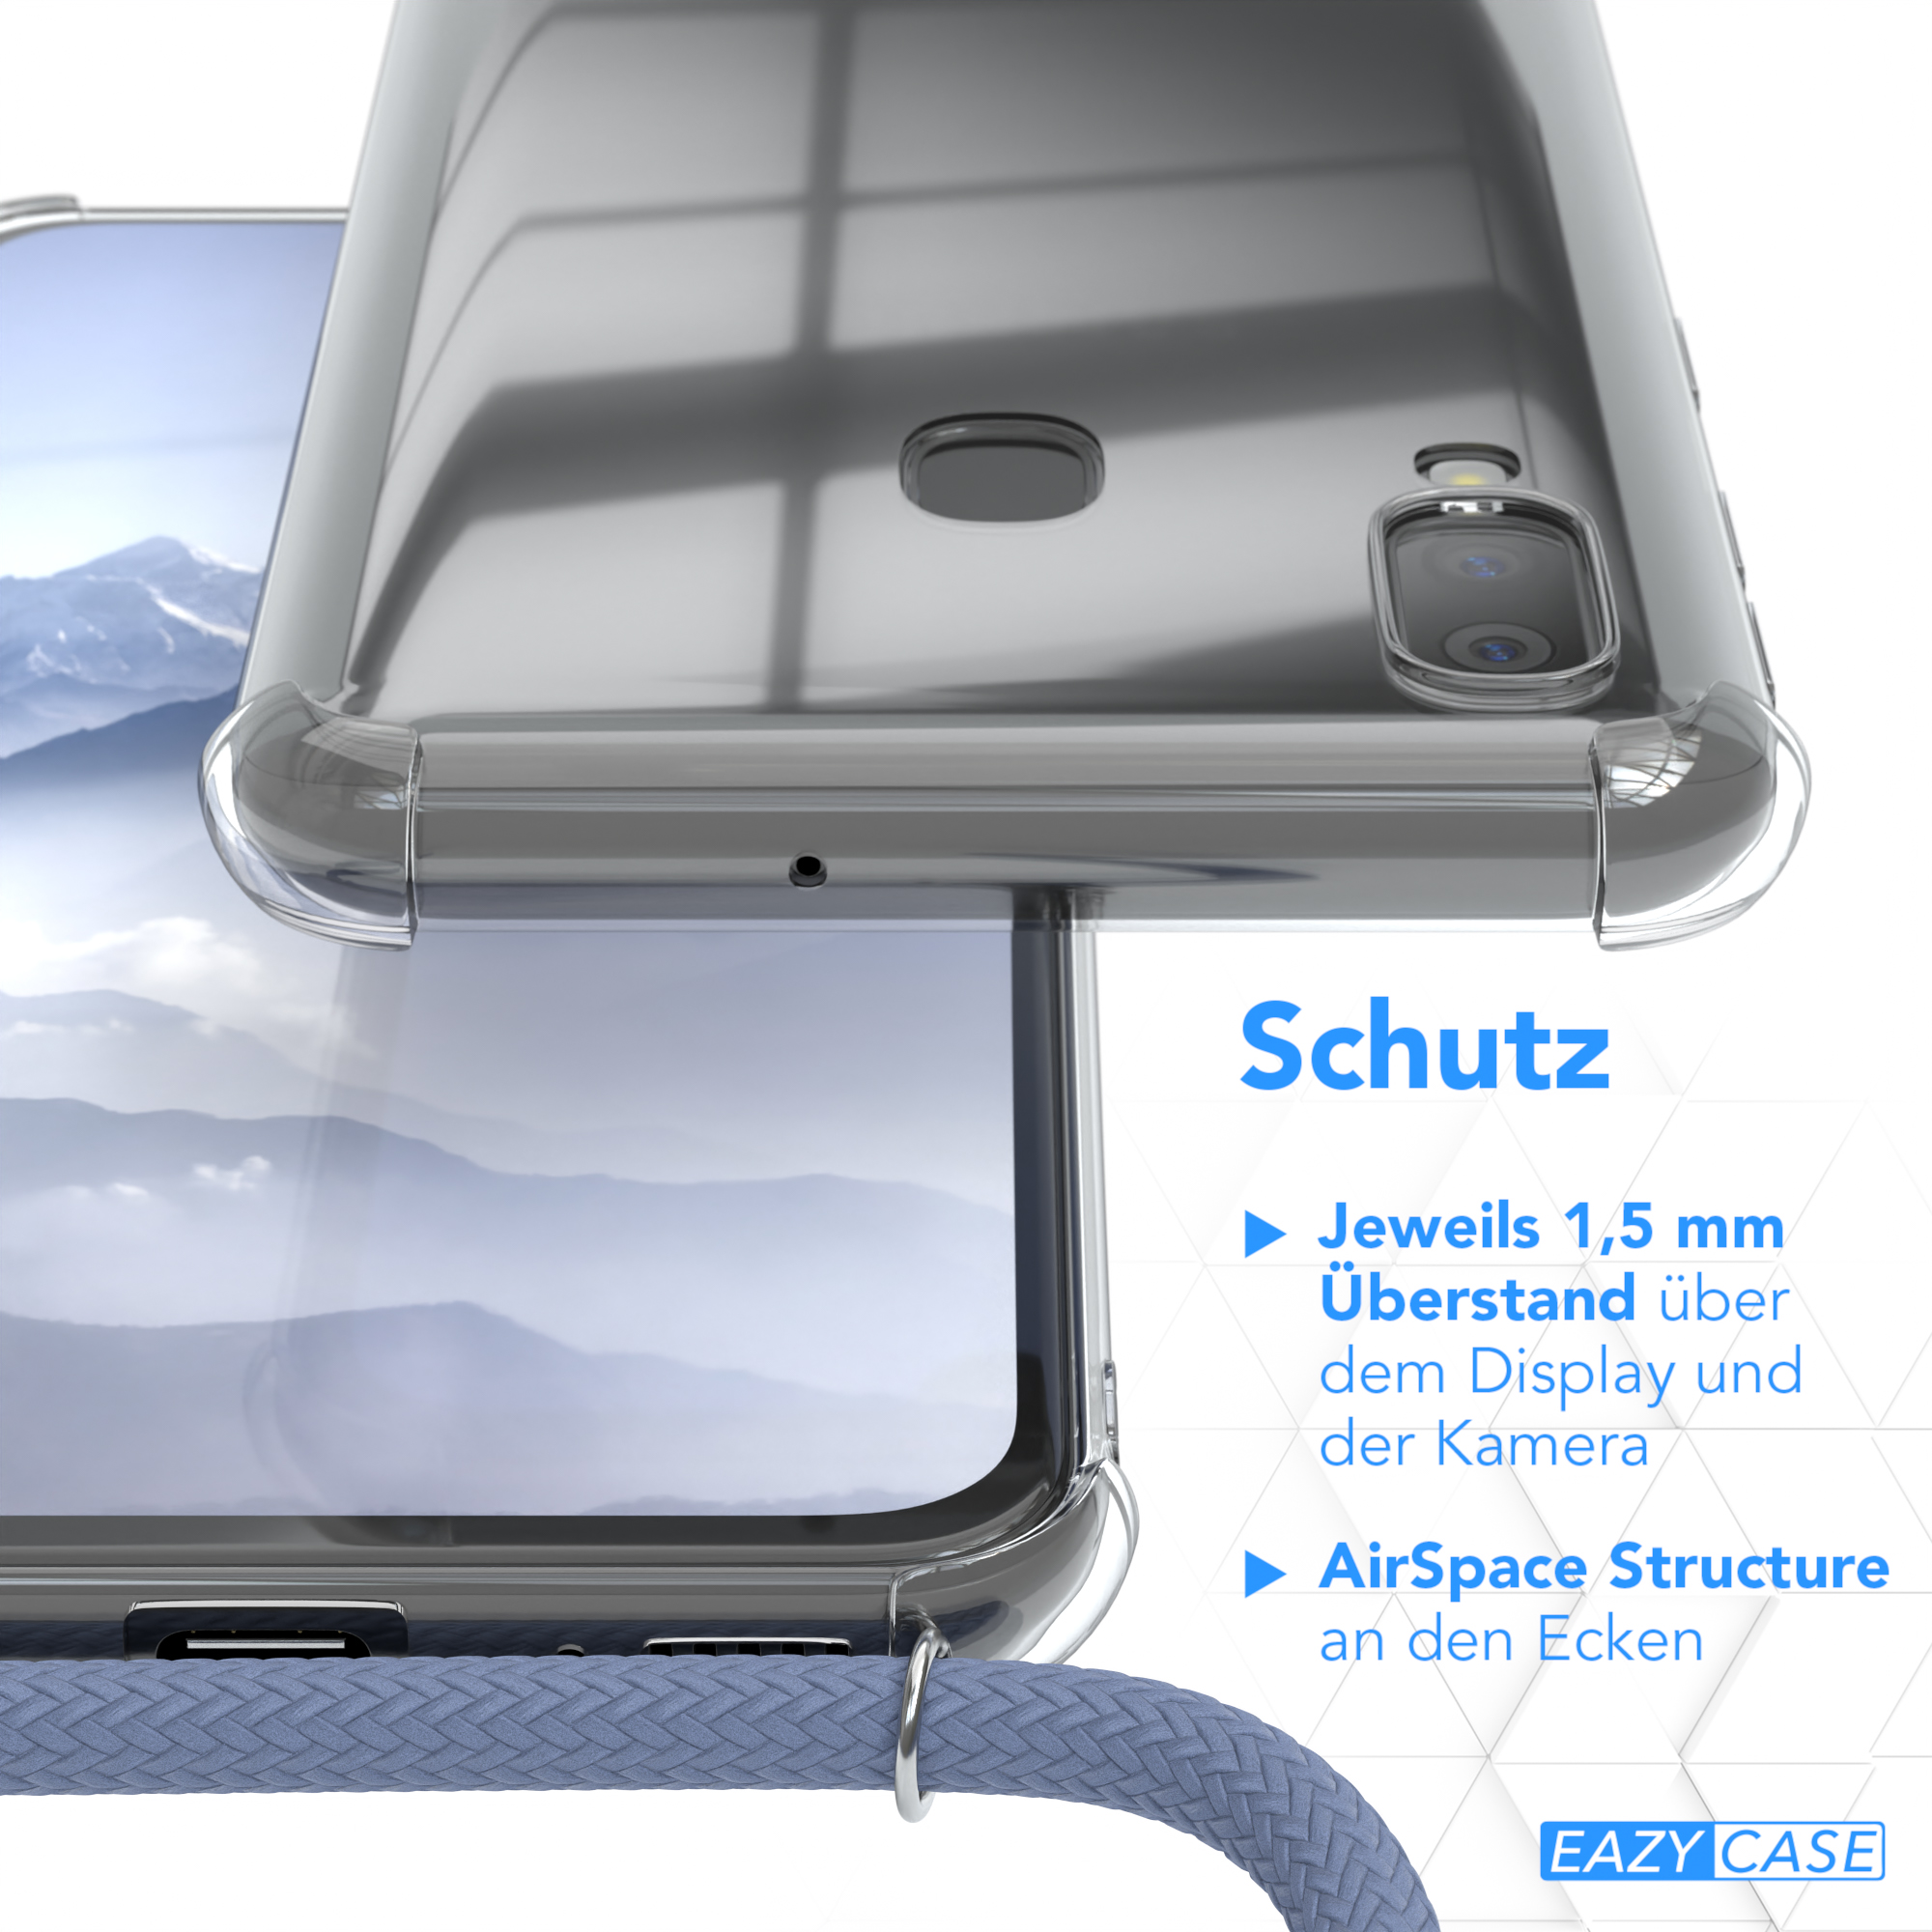 Umhängeband, Umhängetasche, Blau Cover Galaxy Samsung, Clear mit EAZY CASE A40,